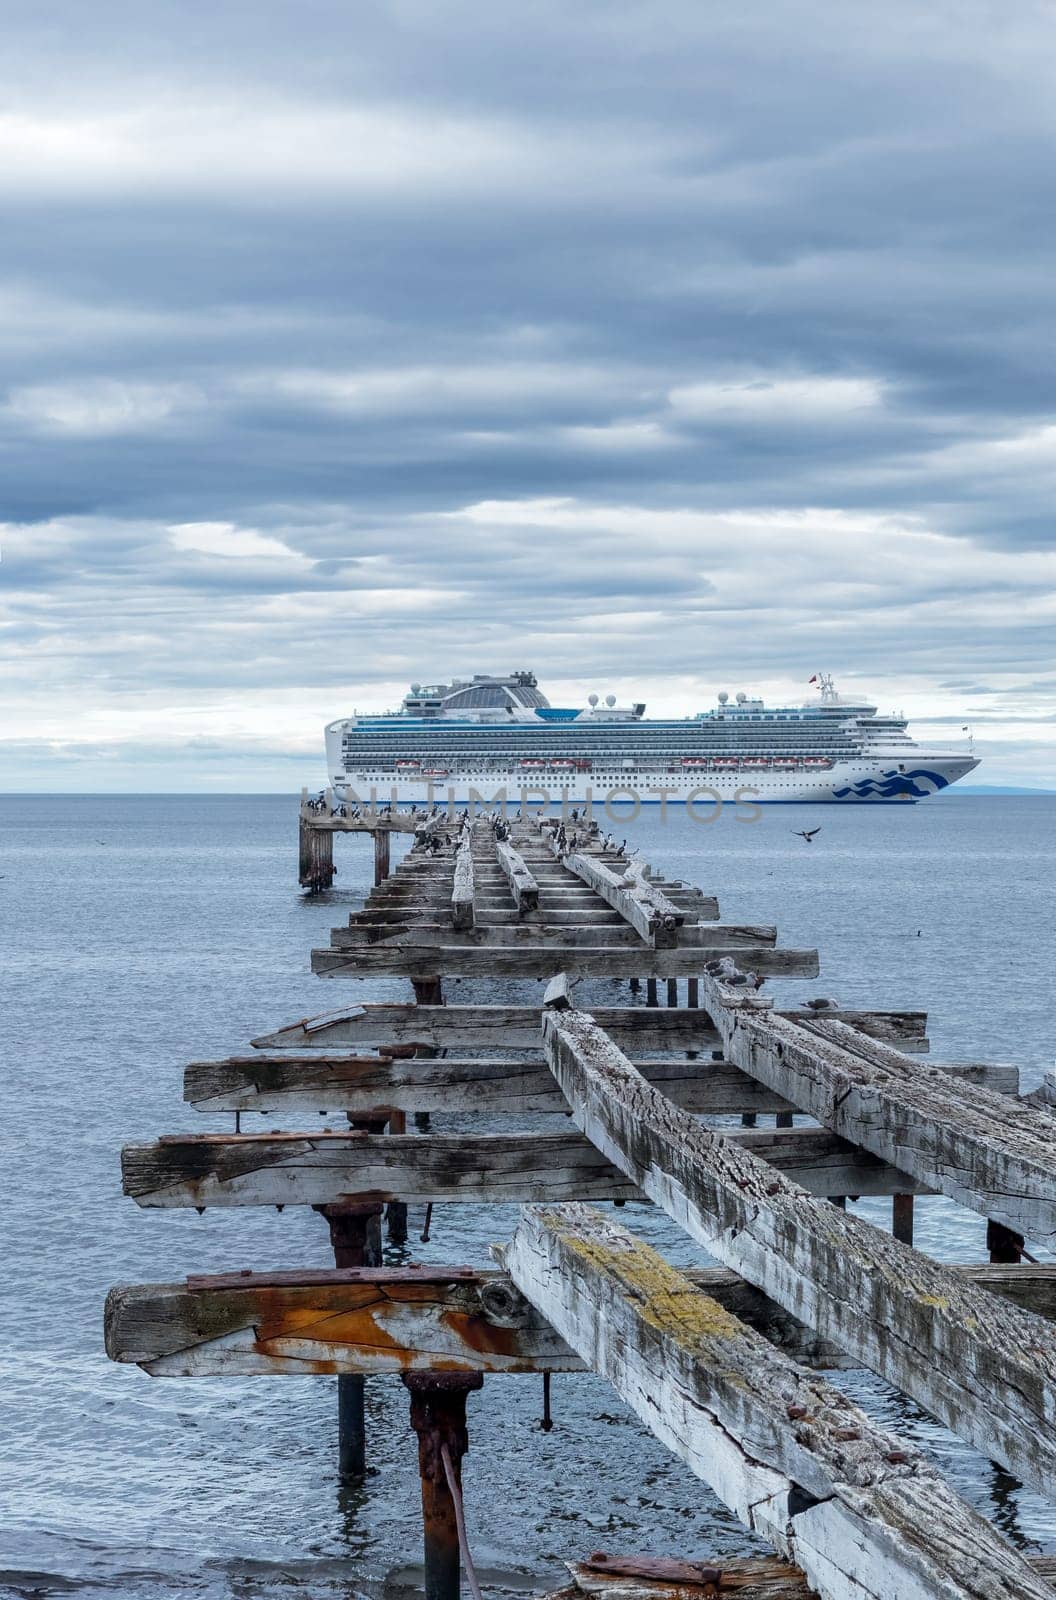 Aged pier meets modern cruise ship beneath a striking cloudy sky at sea.